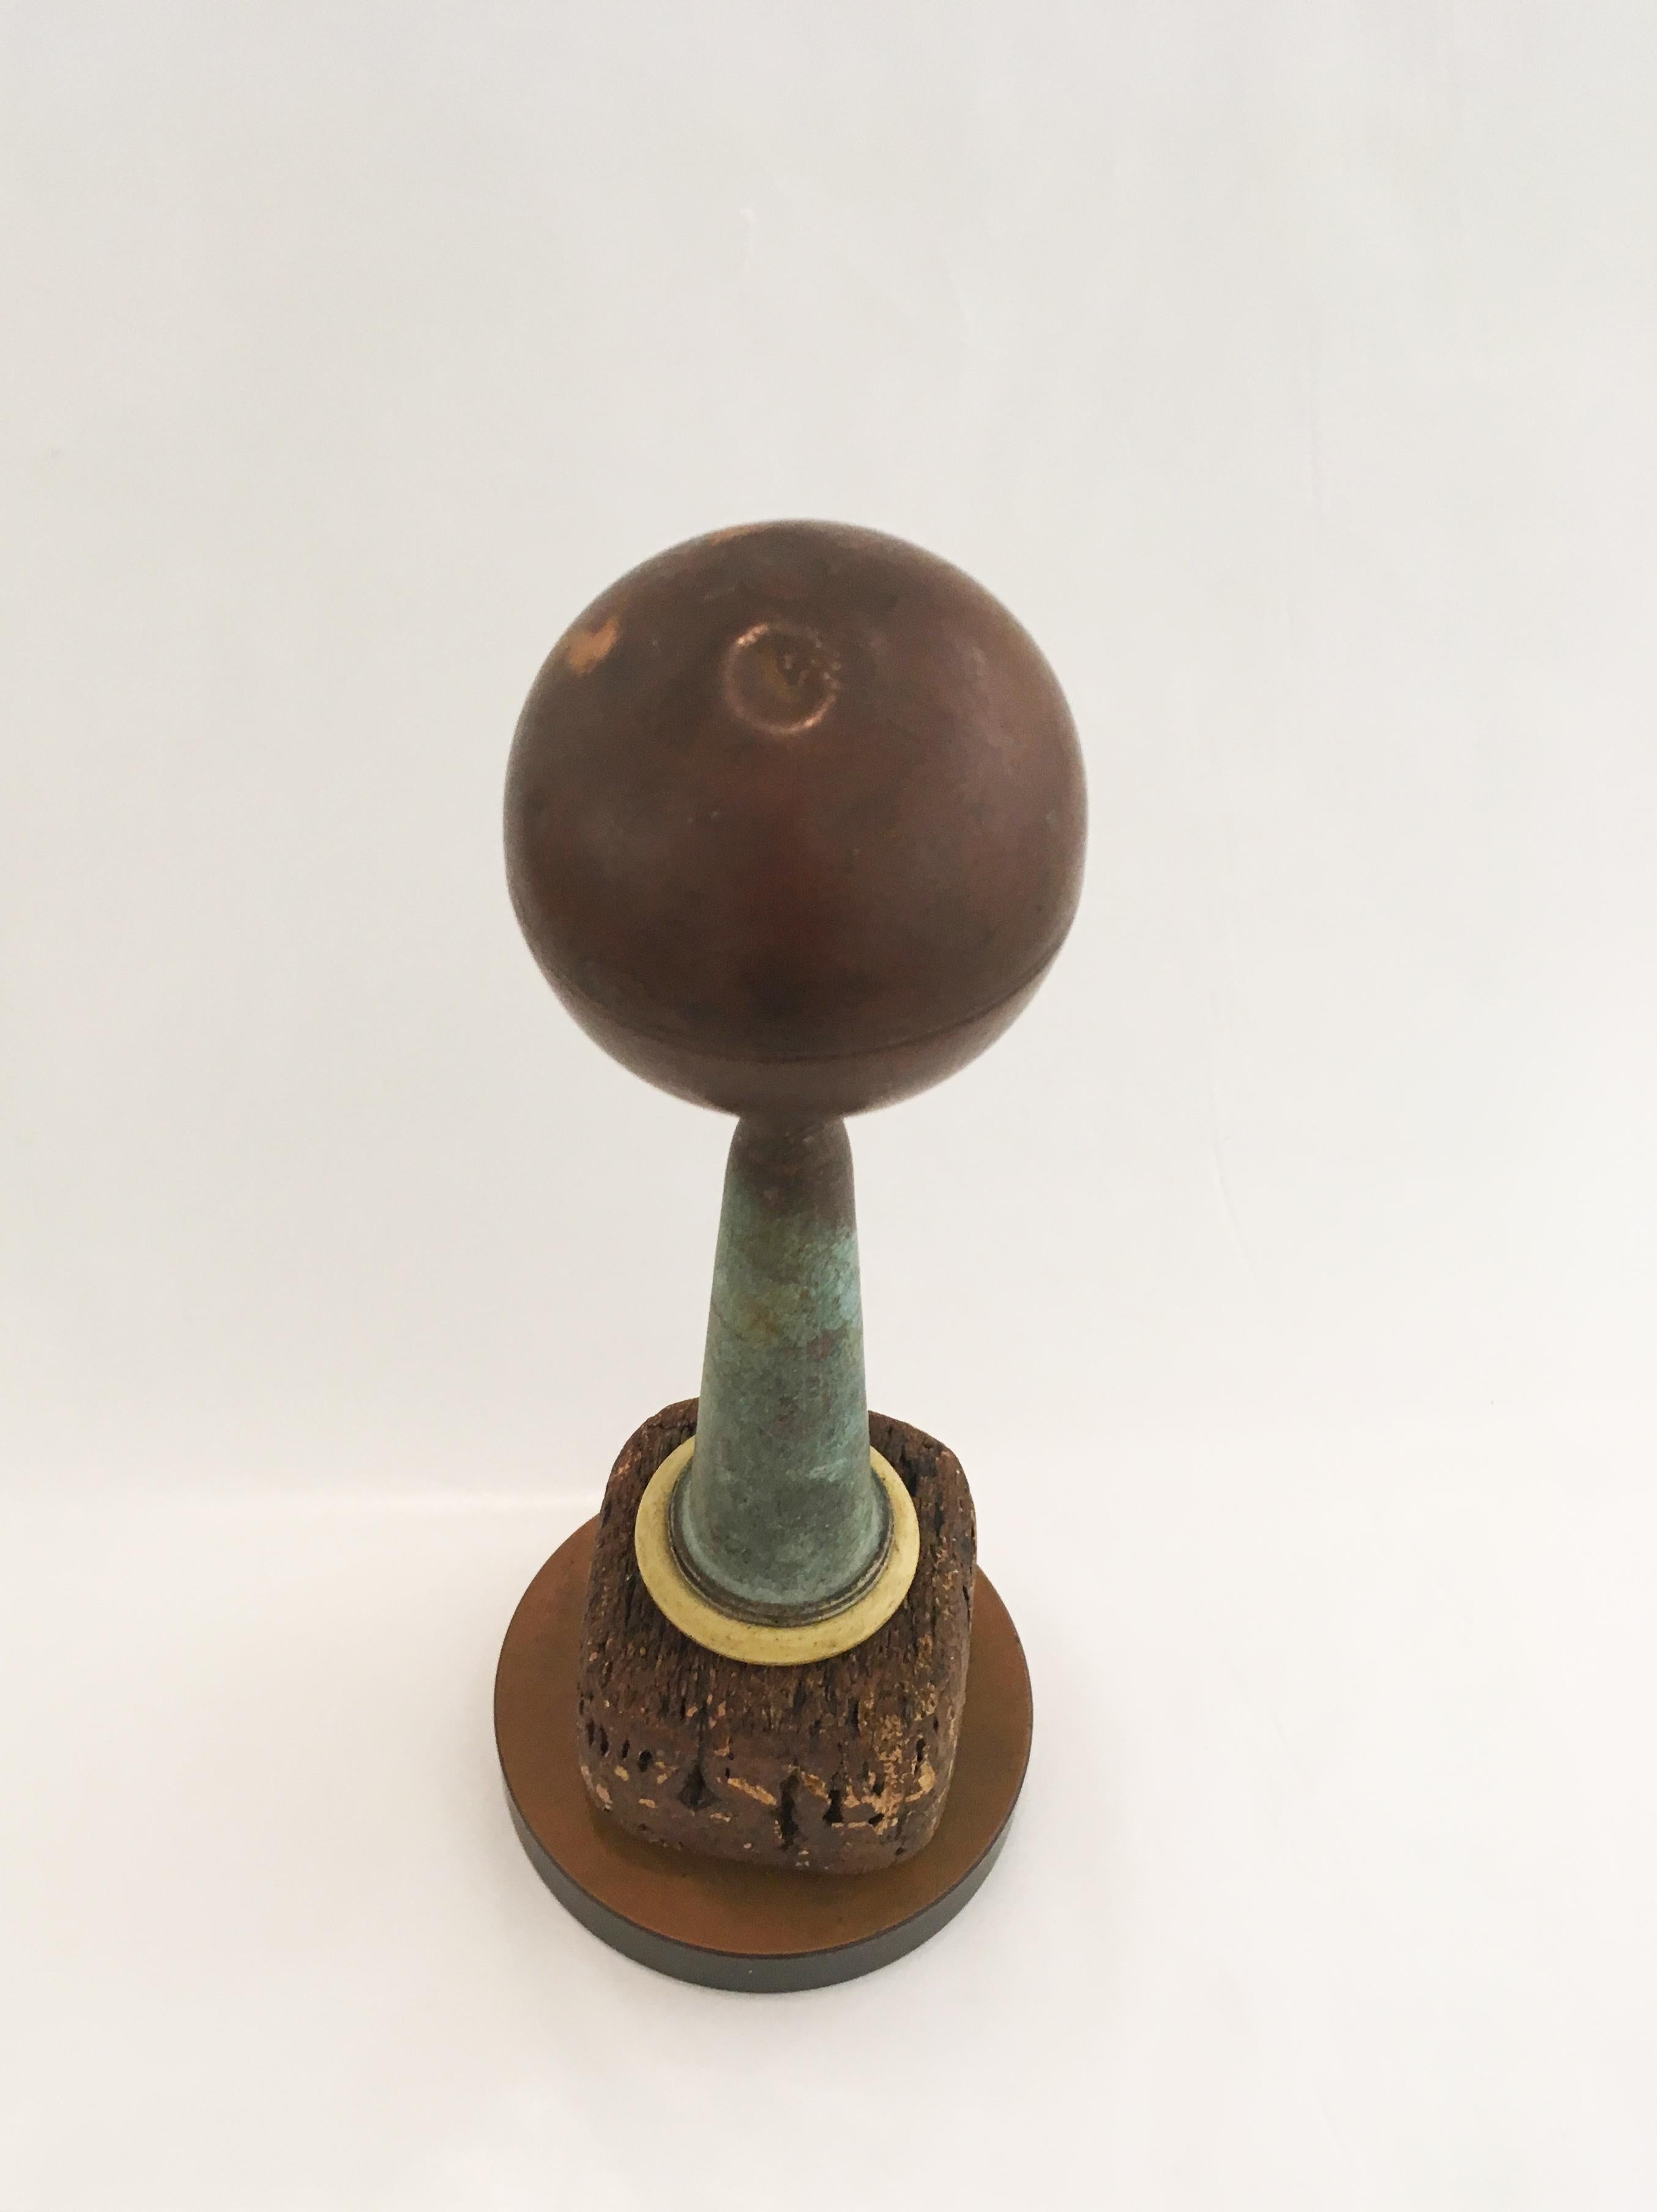 Tensionless, cork, copper, brass, celluloid, resin, found object sculpture 1